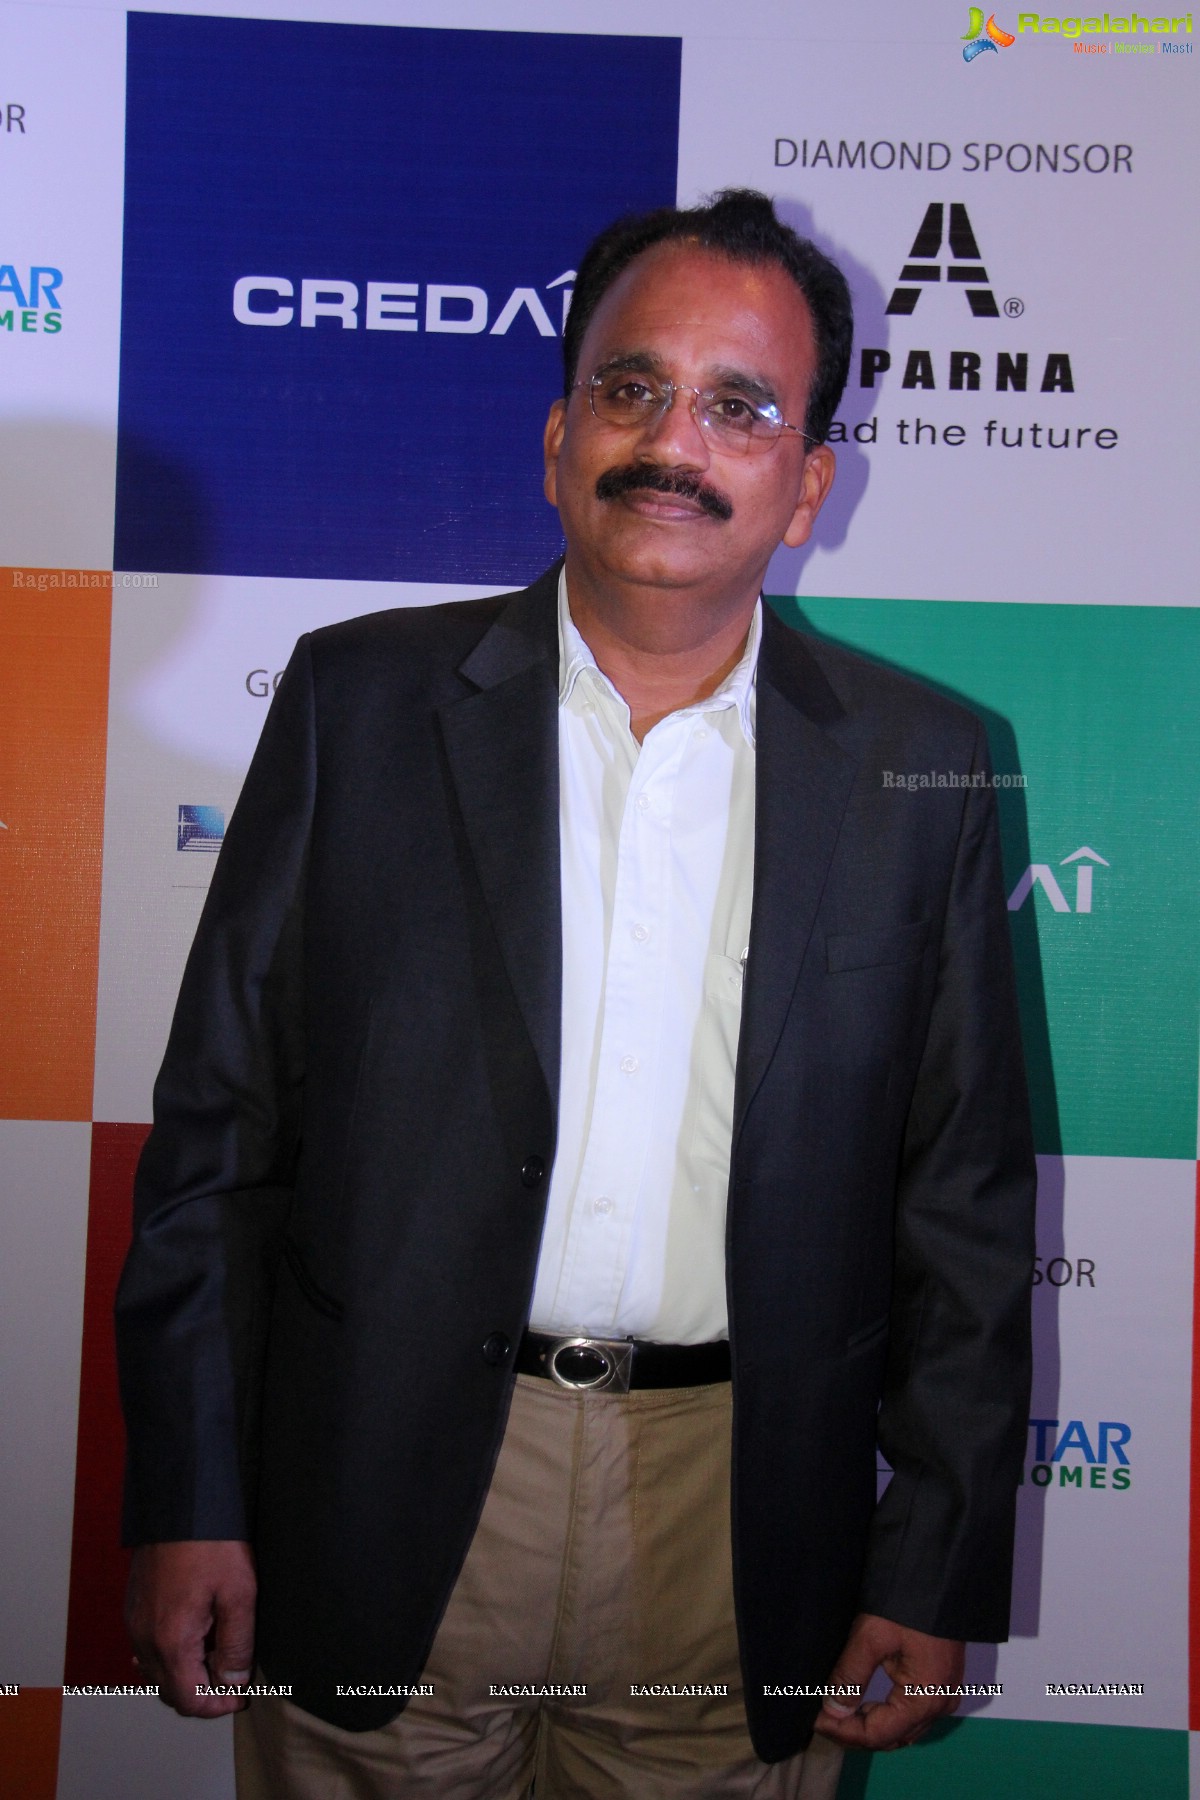 CREDAI Hyderabad Property Show 2014 Press Meet